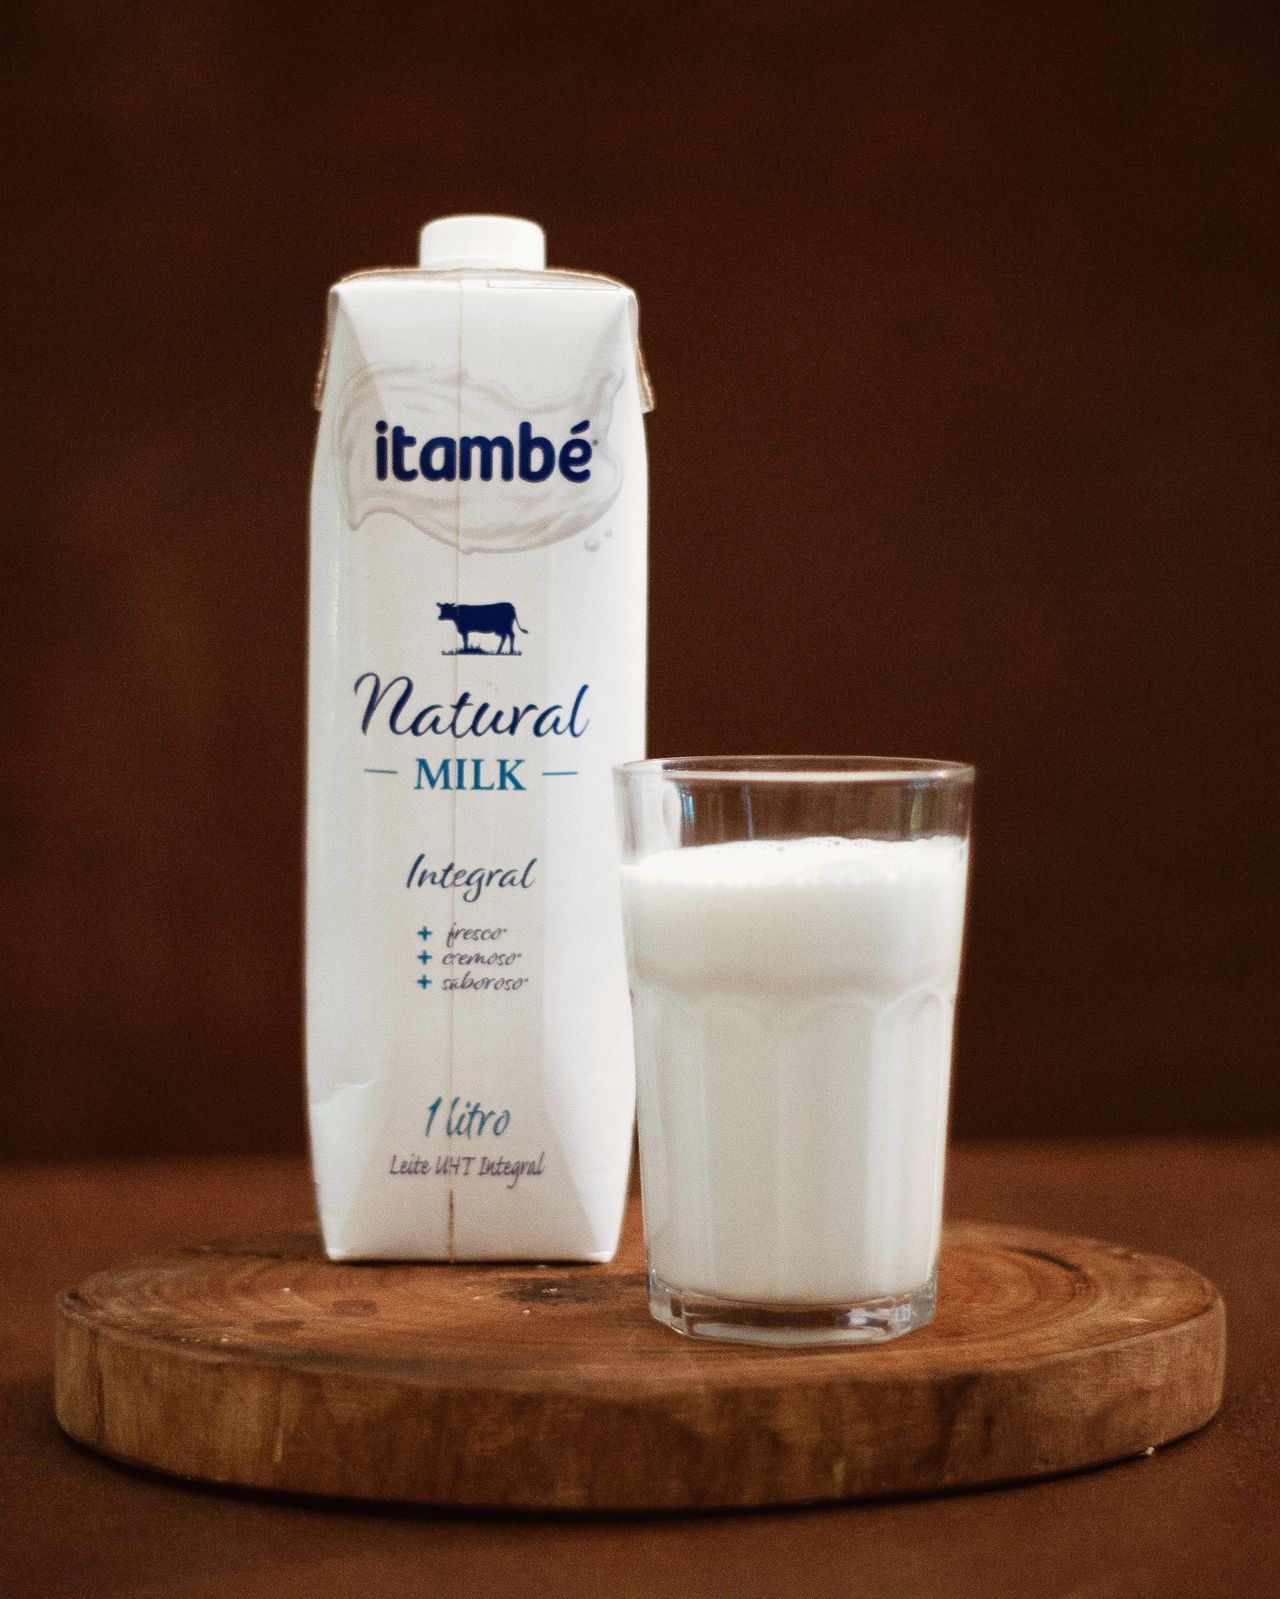 10 Popular Milk Brands in Kenya Ranked From Worst to Best